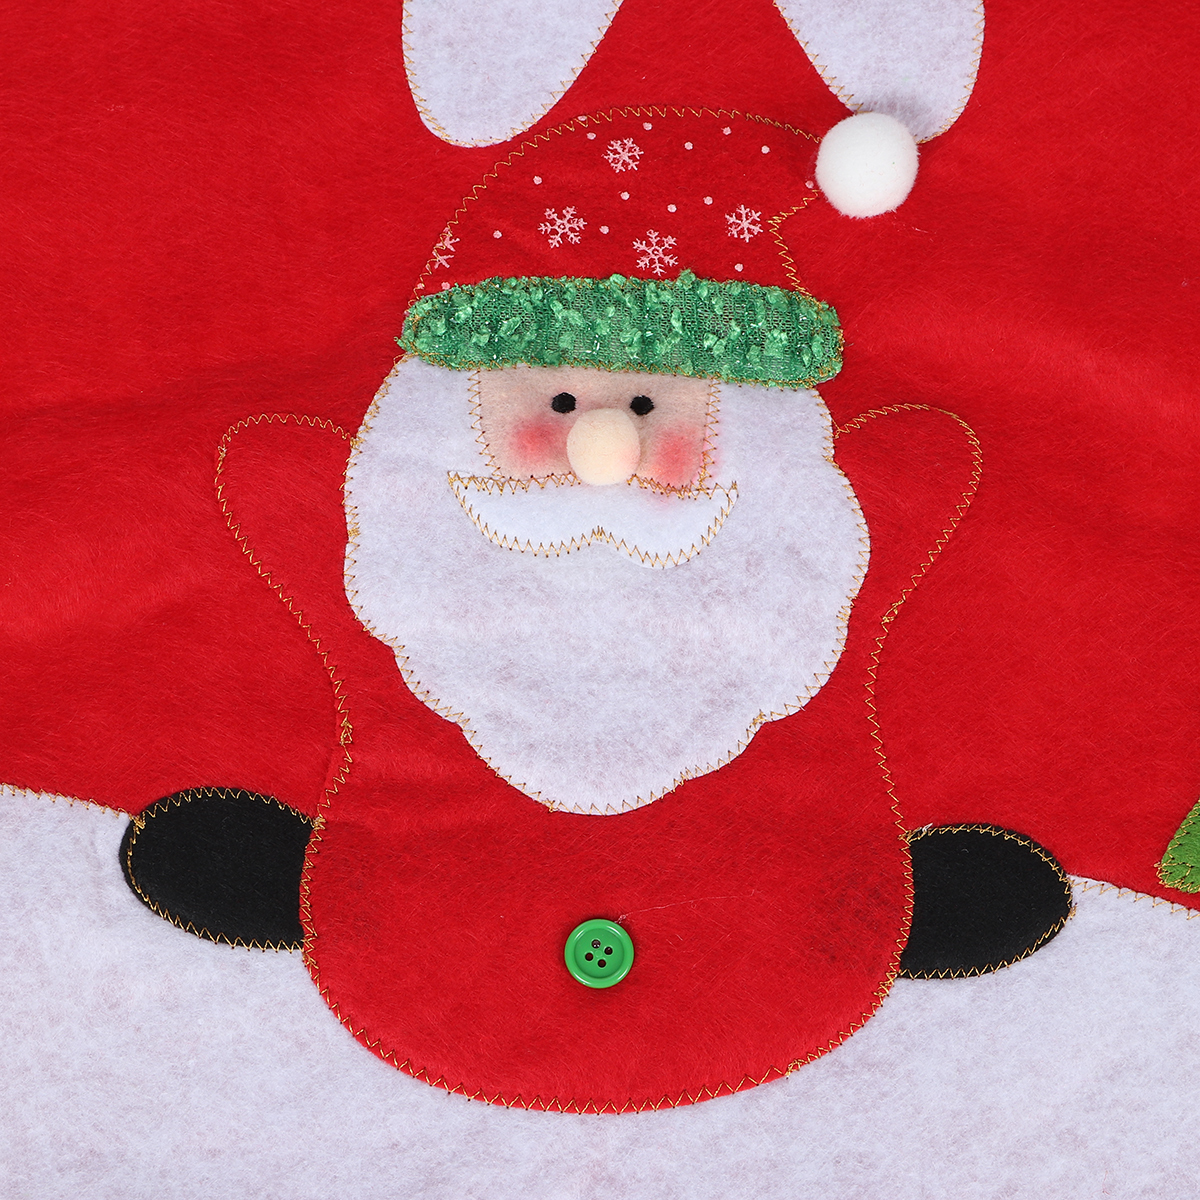 2020-Christmas-Decor-Santa-Claus-Christmas-Tree-Skirt-Aprons-New-Year-Xmas-Tree-Carpet-Foot-Cover-fo-1770951-5